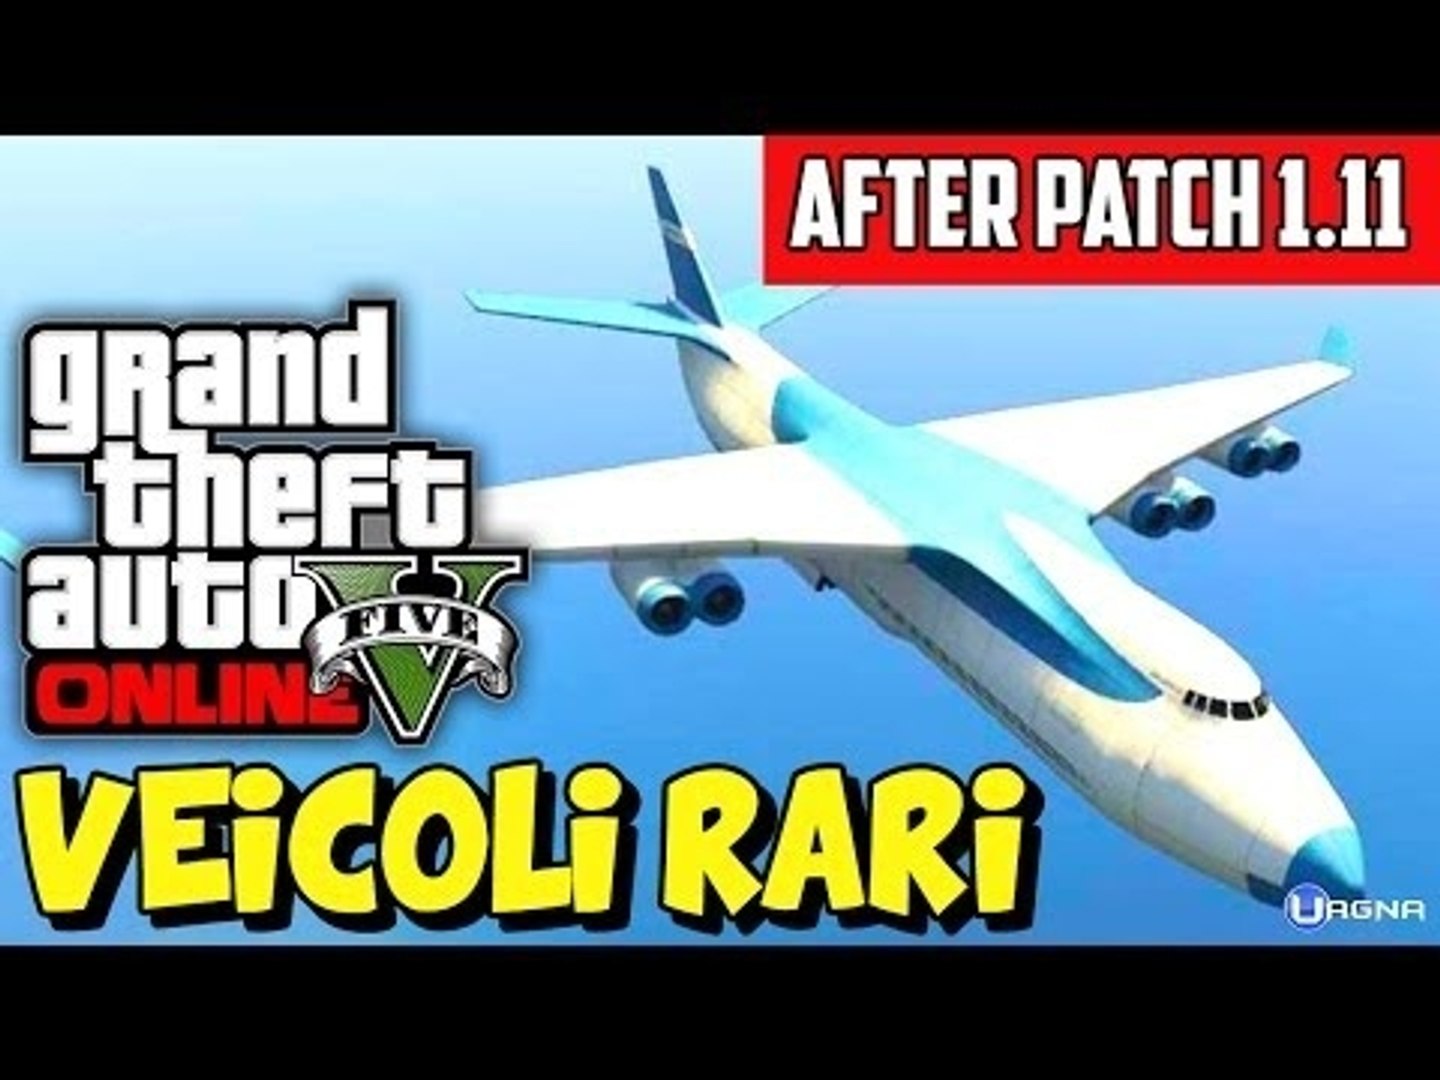 Trucchi GTA 5: Come ottenere tutti i mezzi Rari! Cargo Plane, Atomic Blind,  Alieni, Auto neve - Video Dailymotion